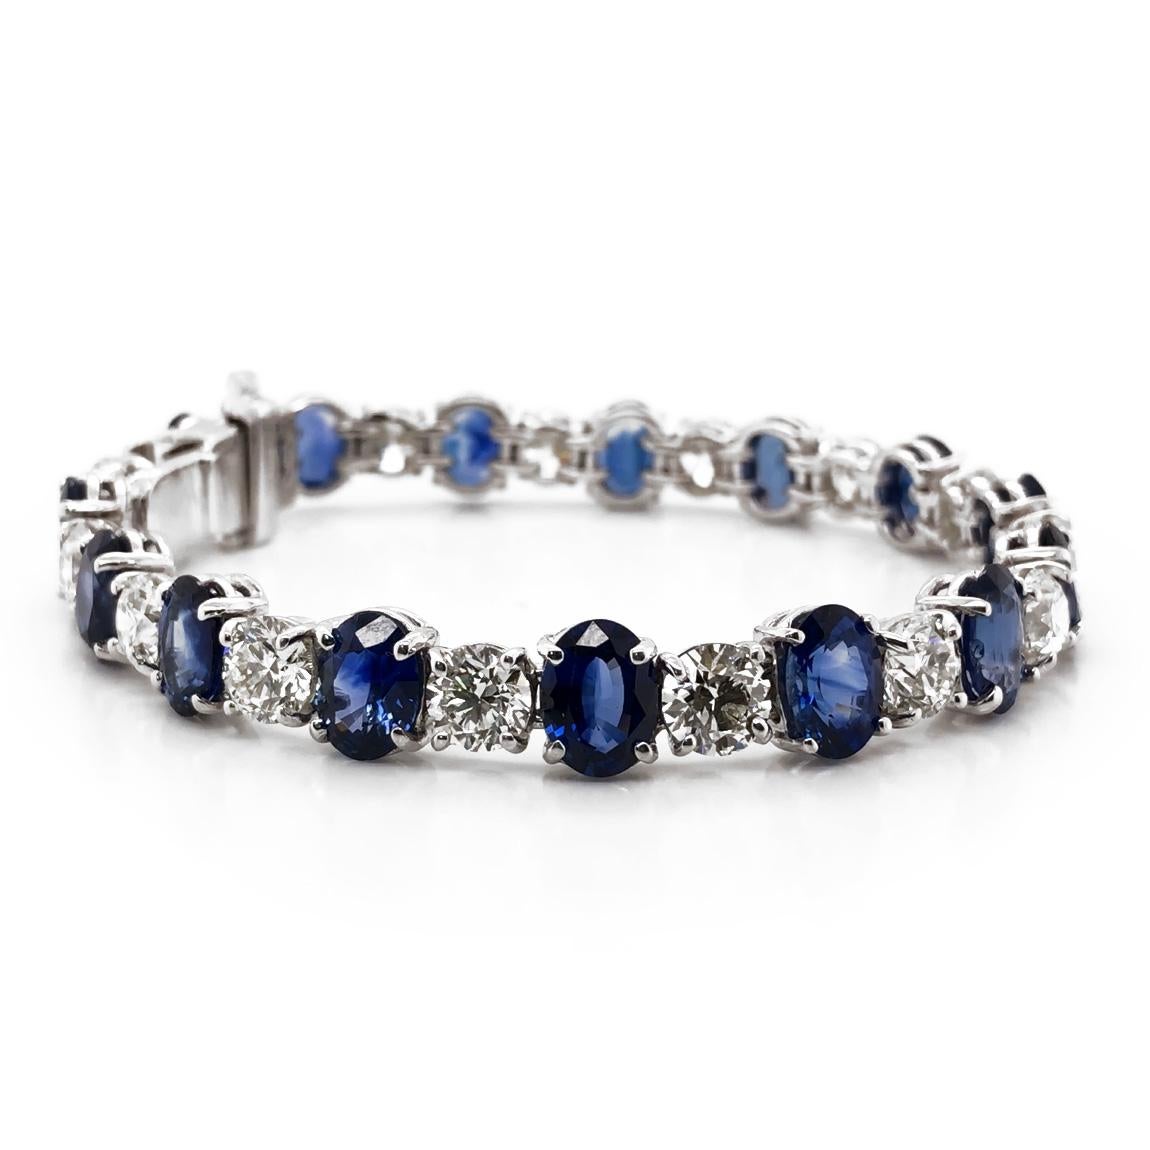 Oval Cut Ceylon oval sapphires 19.44 carat round diamonds platinum bracelet For Sale